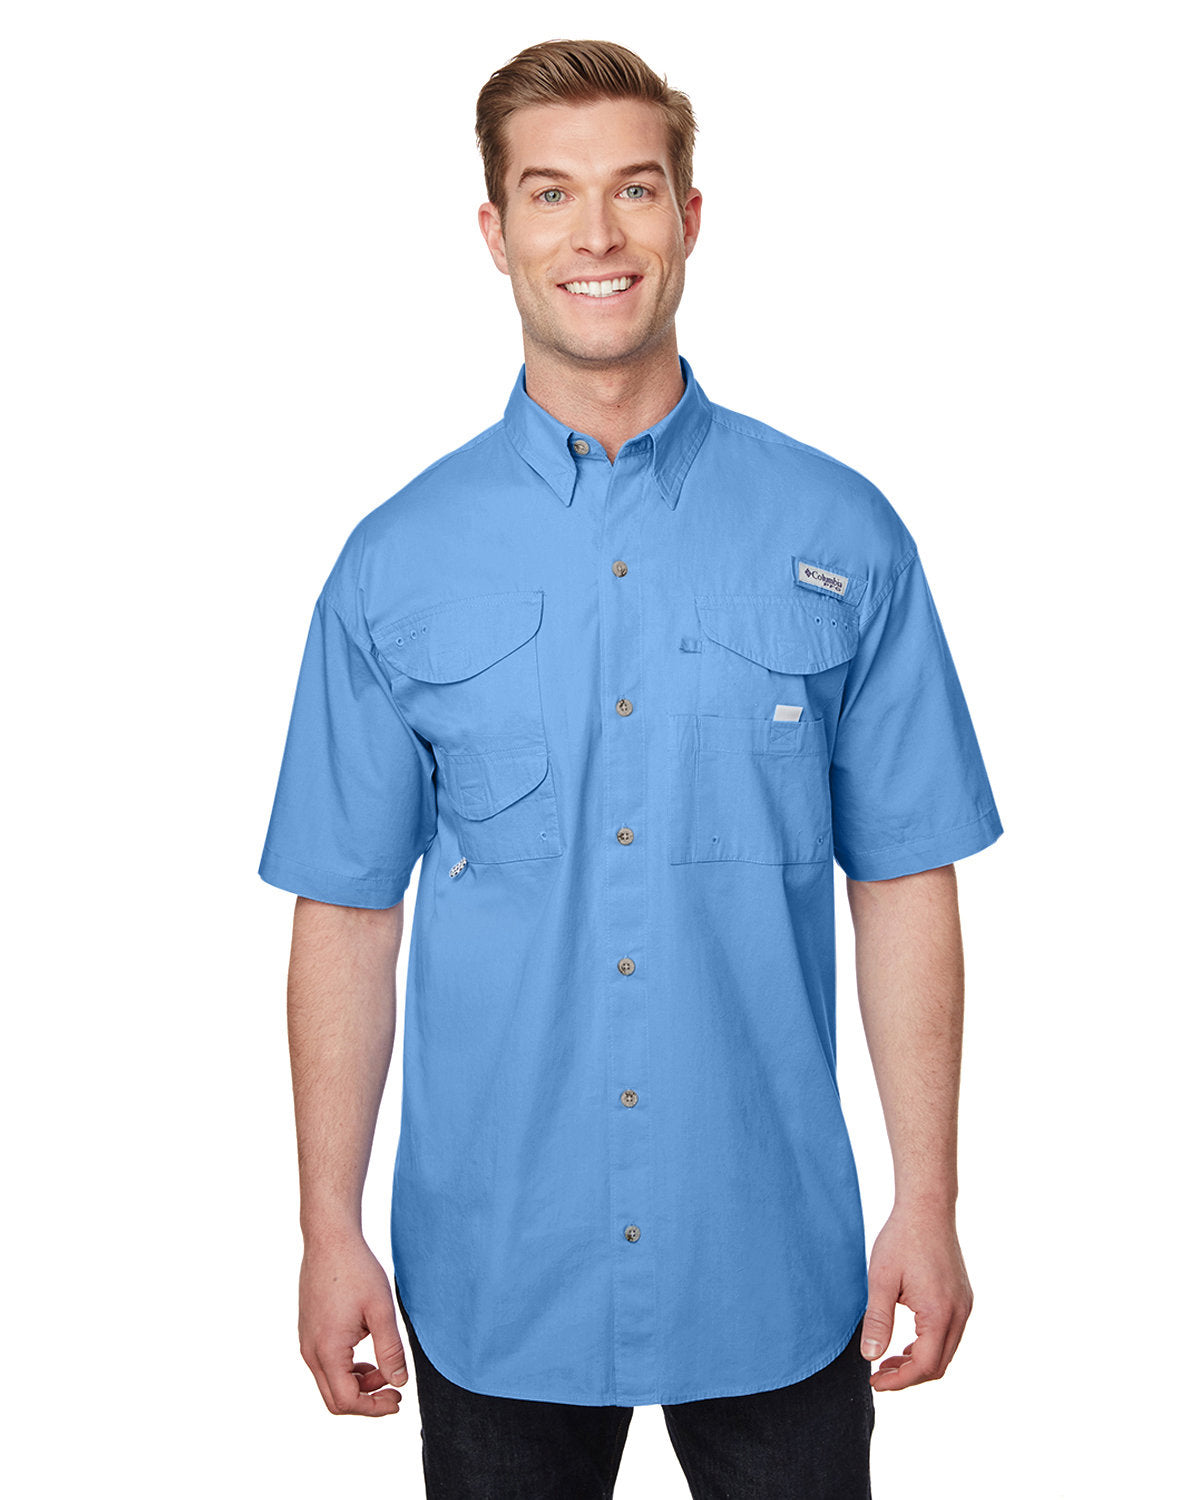 Columbia 7130 Men's Bonehead Shirt - Short-Sleeve